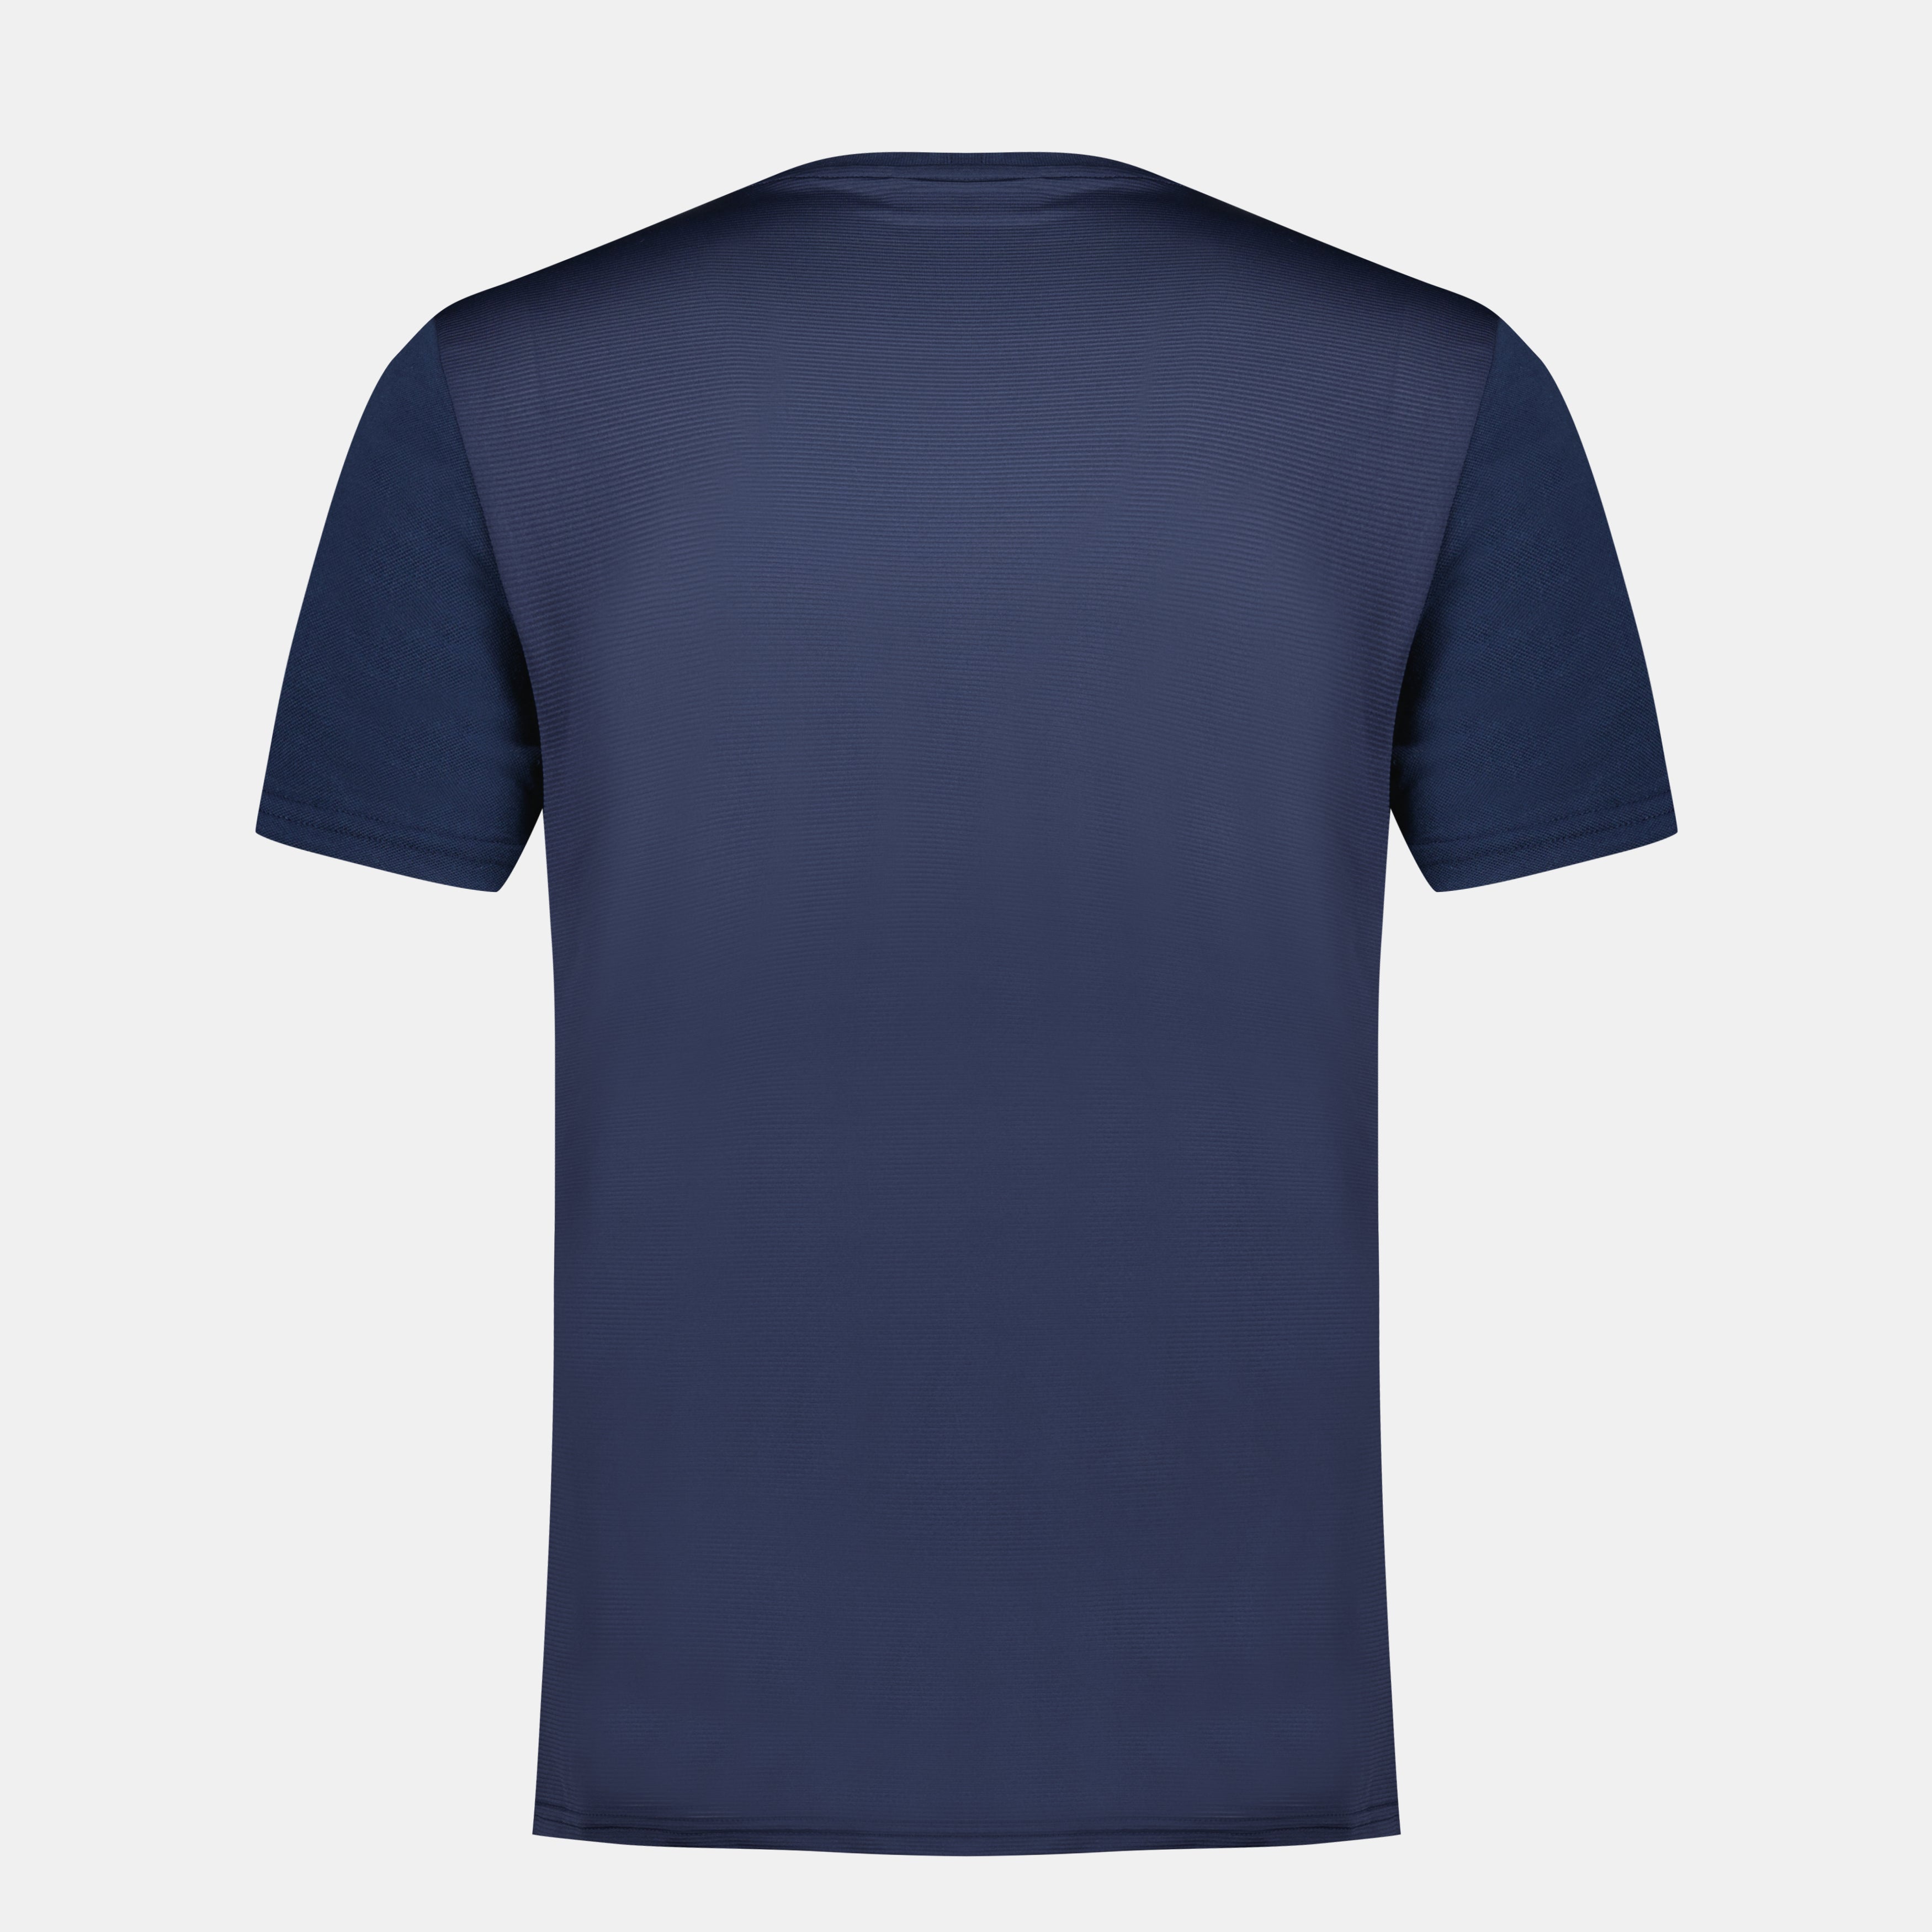 2320133-TENNIS Tee SS N°4 M dress blues | T-shirt Homme